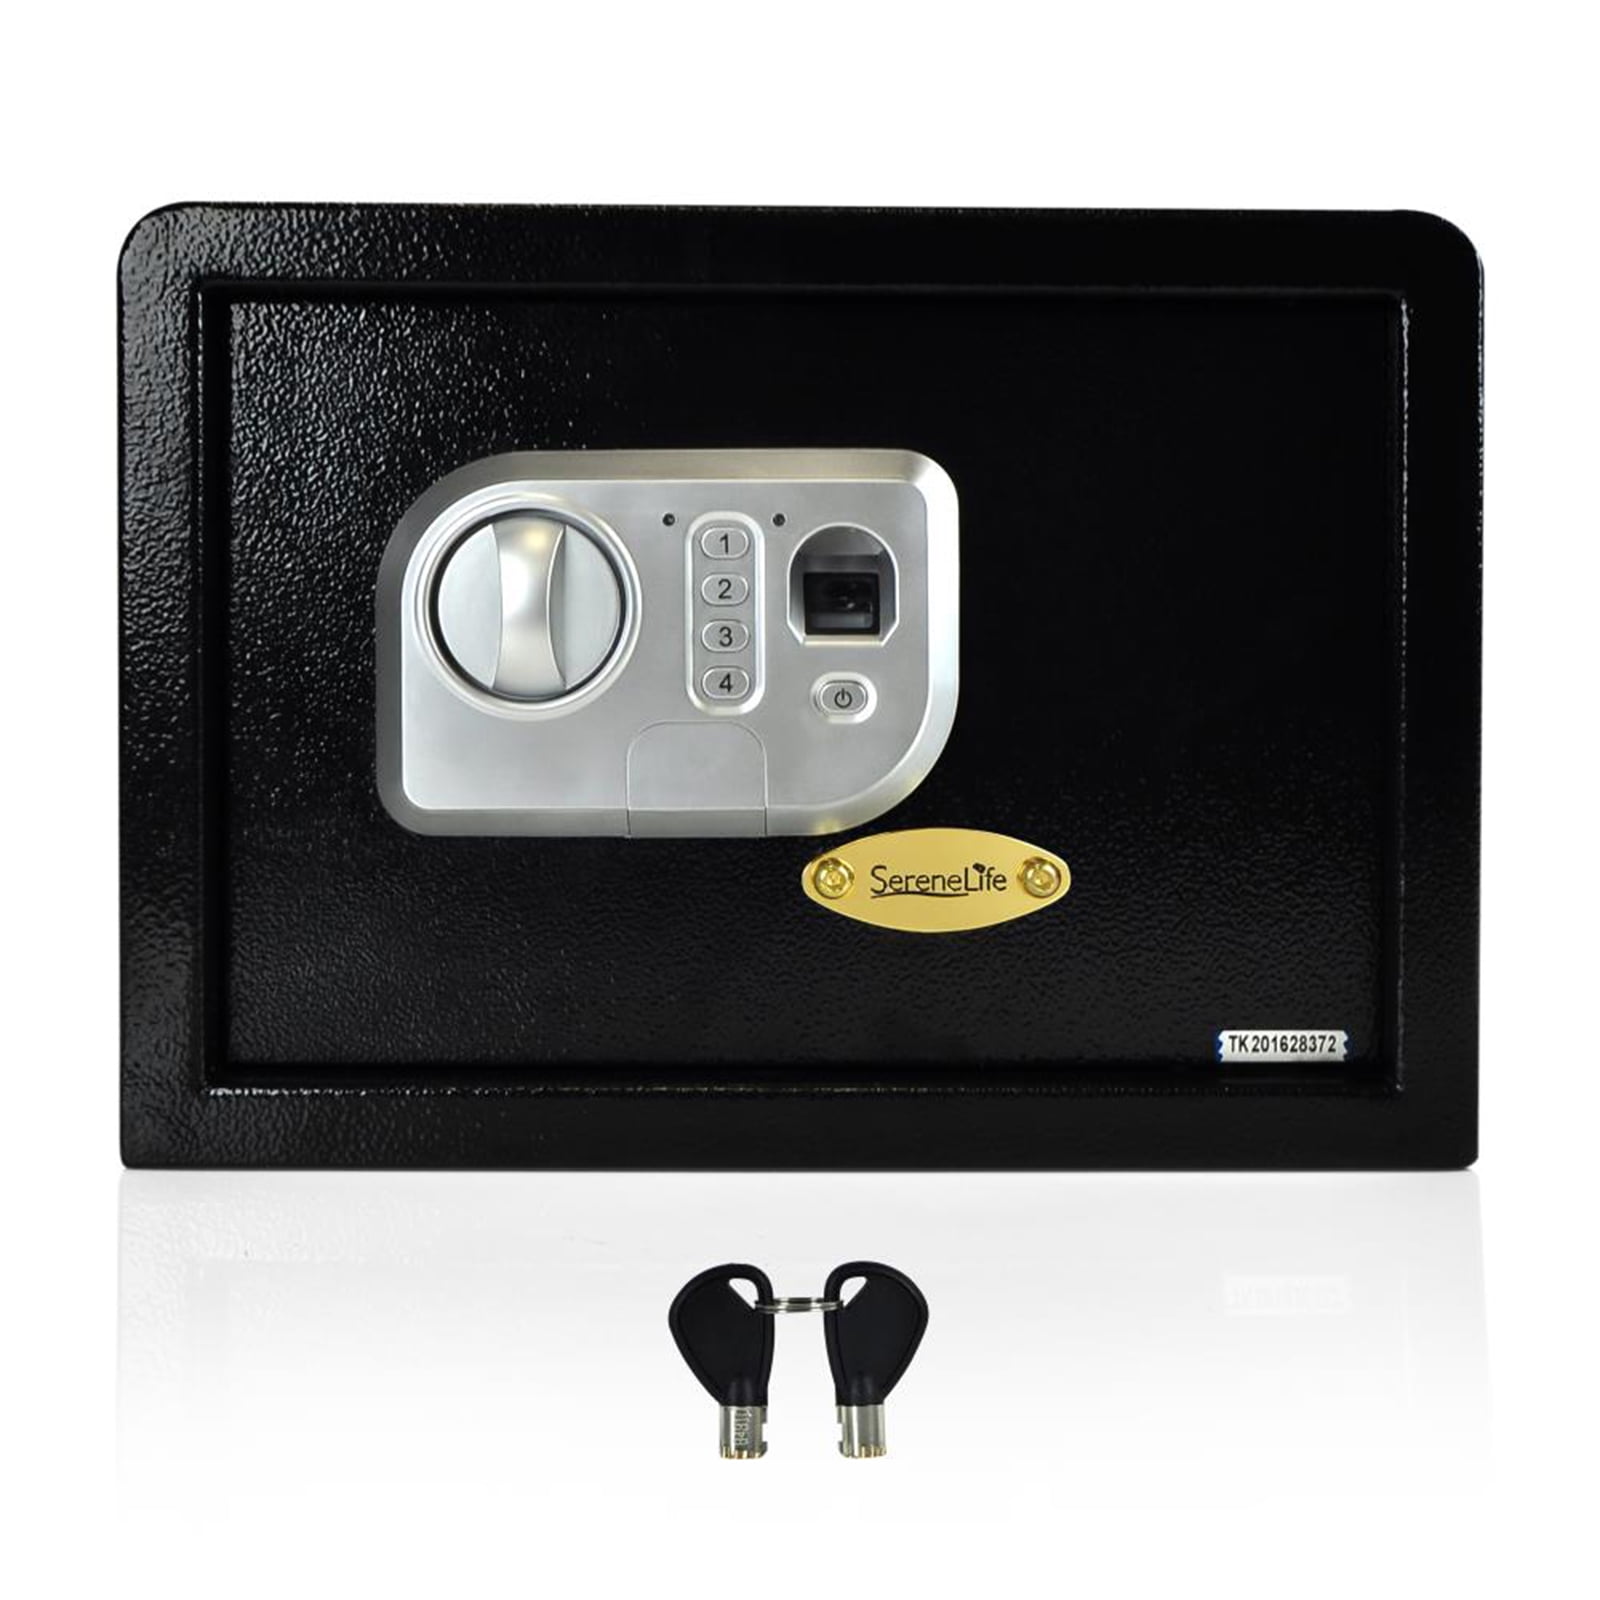 Includes Keys Electronic Fingerprint Safe Box with Mechanical Override 